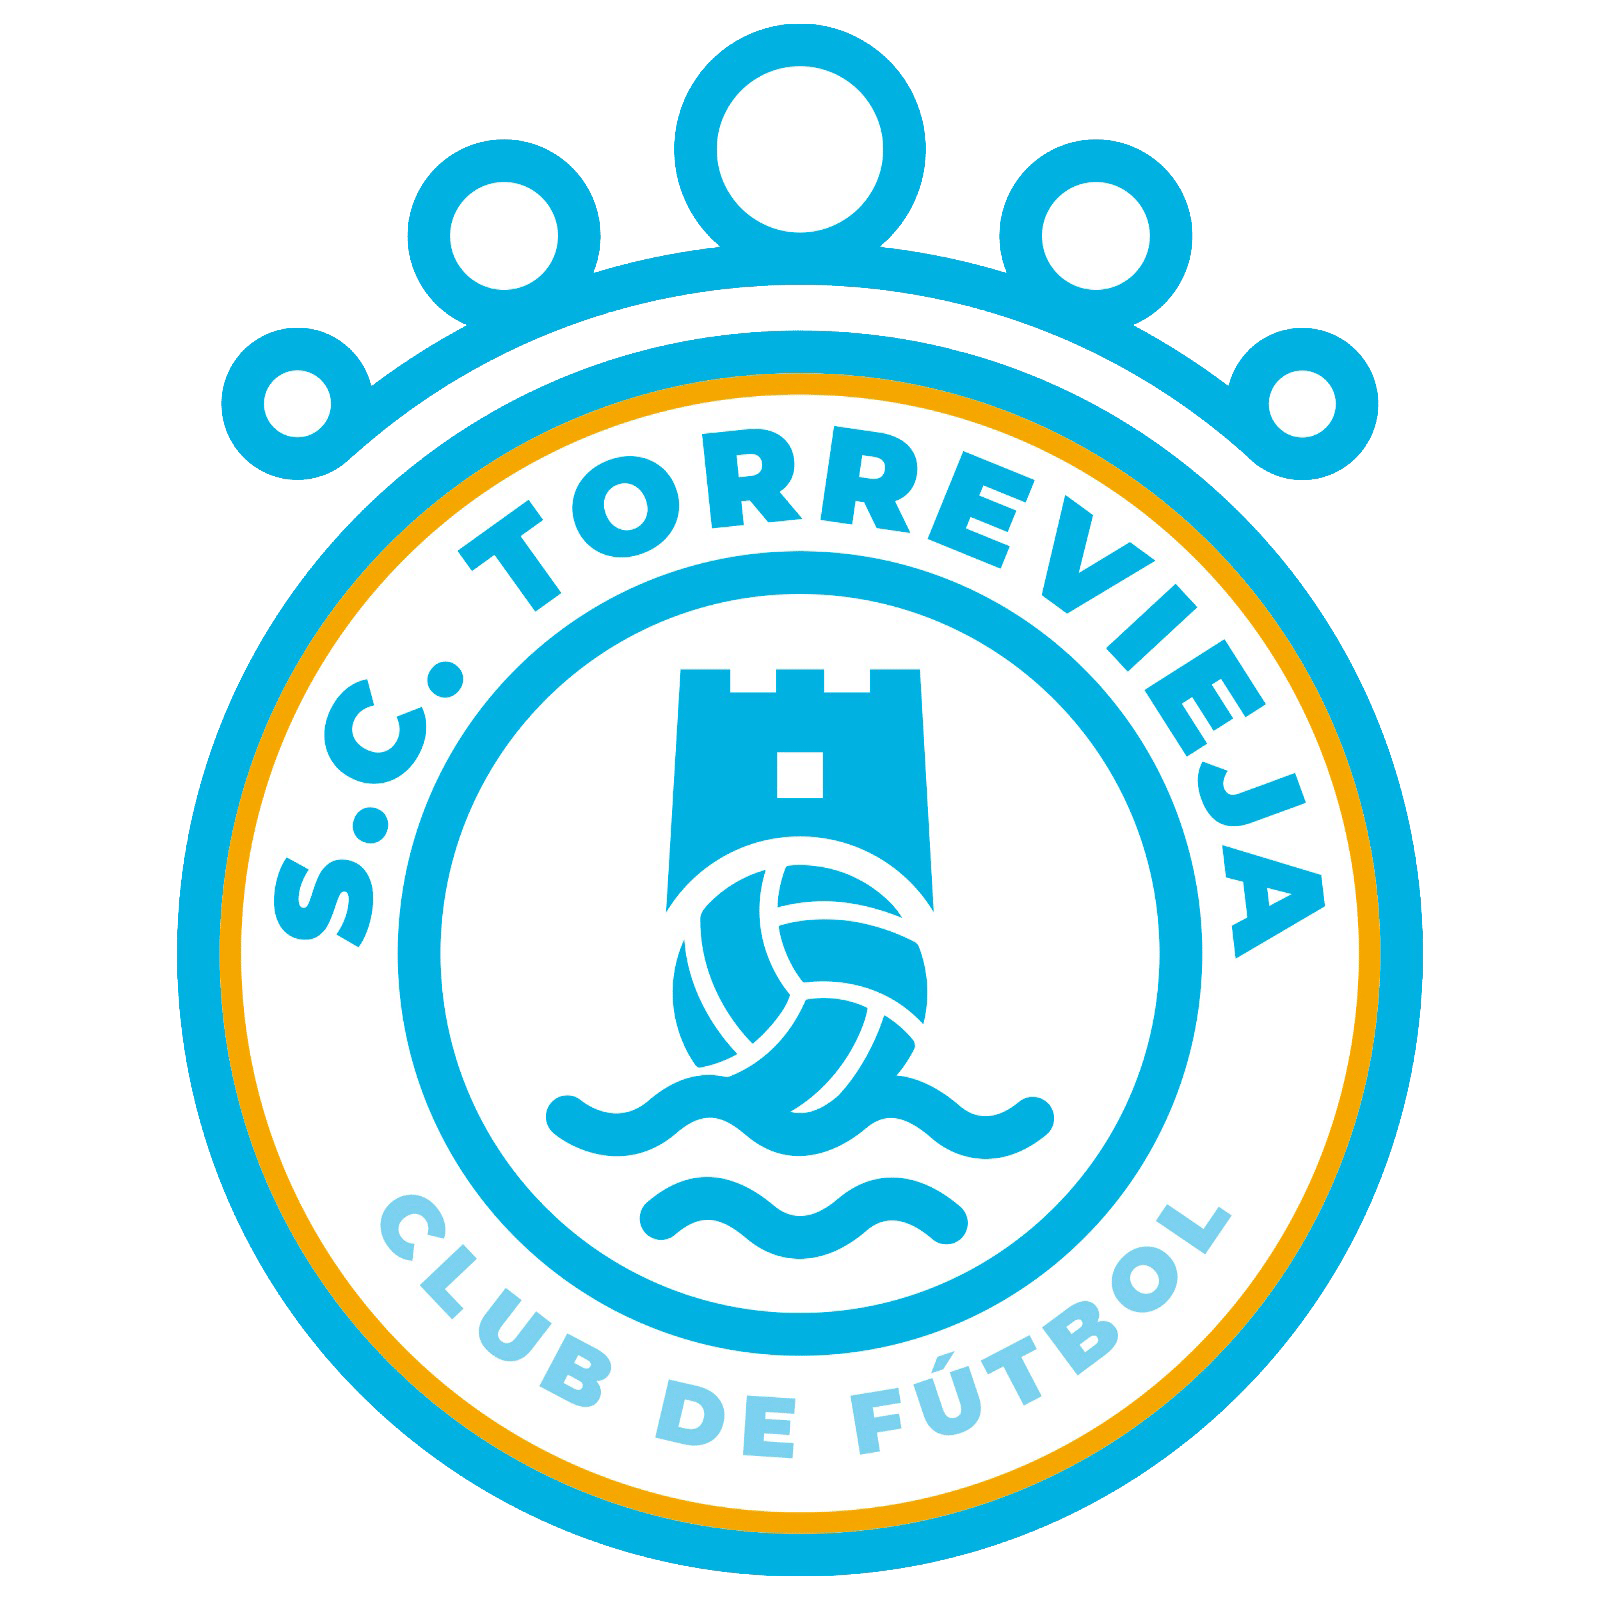 Sporting Costablanca Torrevieja Club de Fútbol